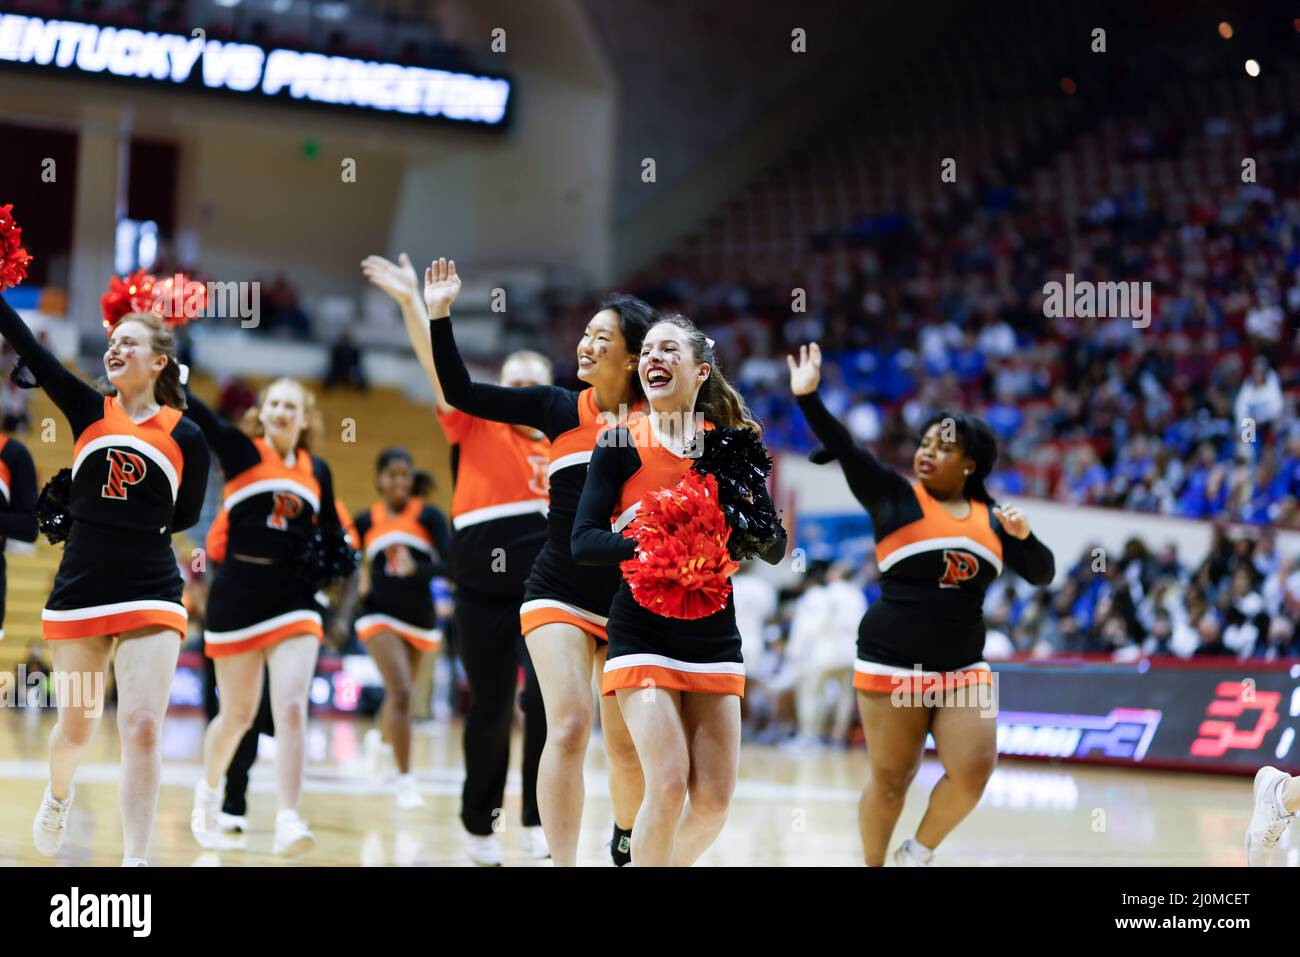 NCAA Tournament cheerleaders